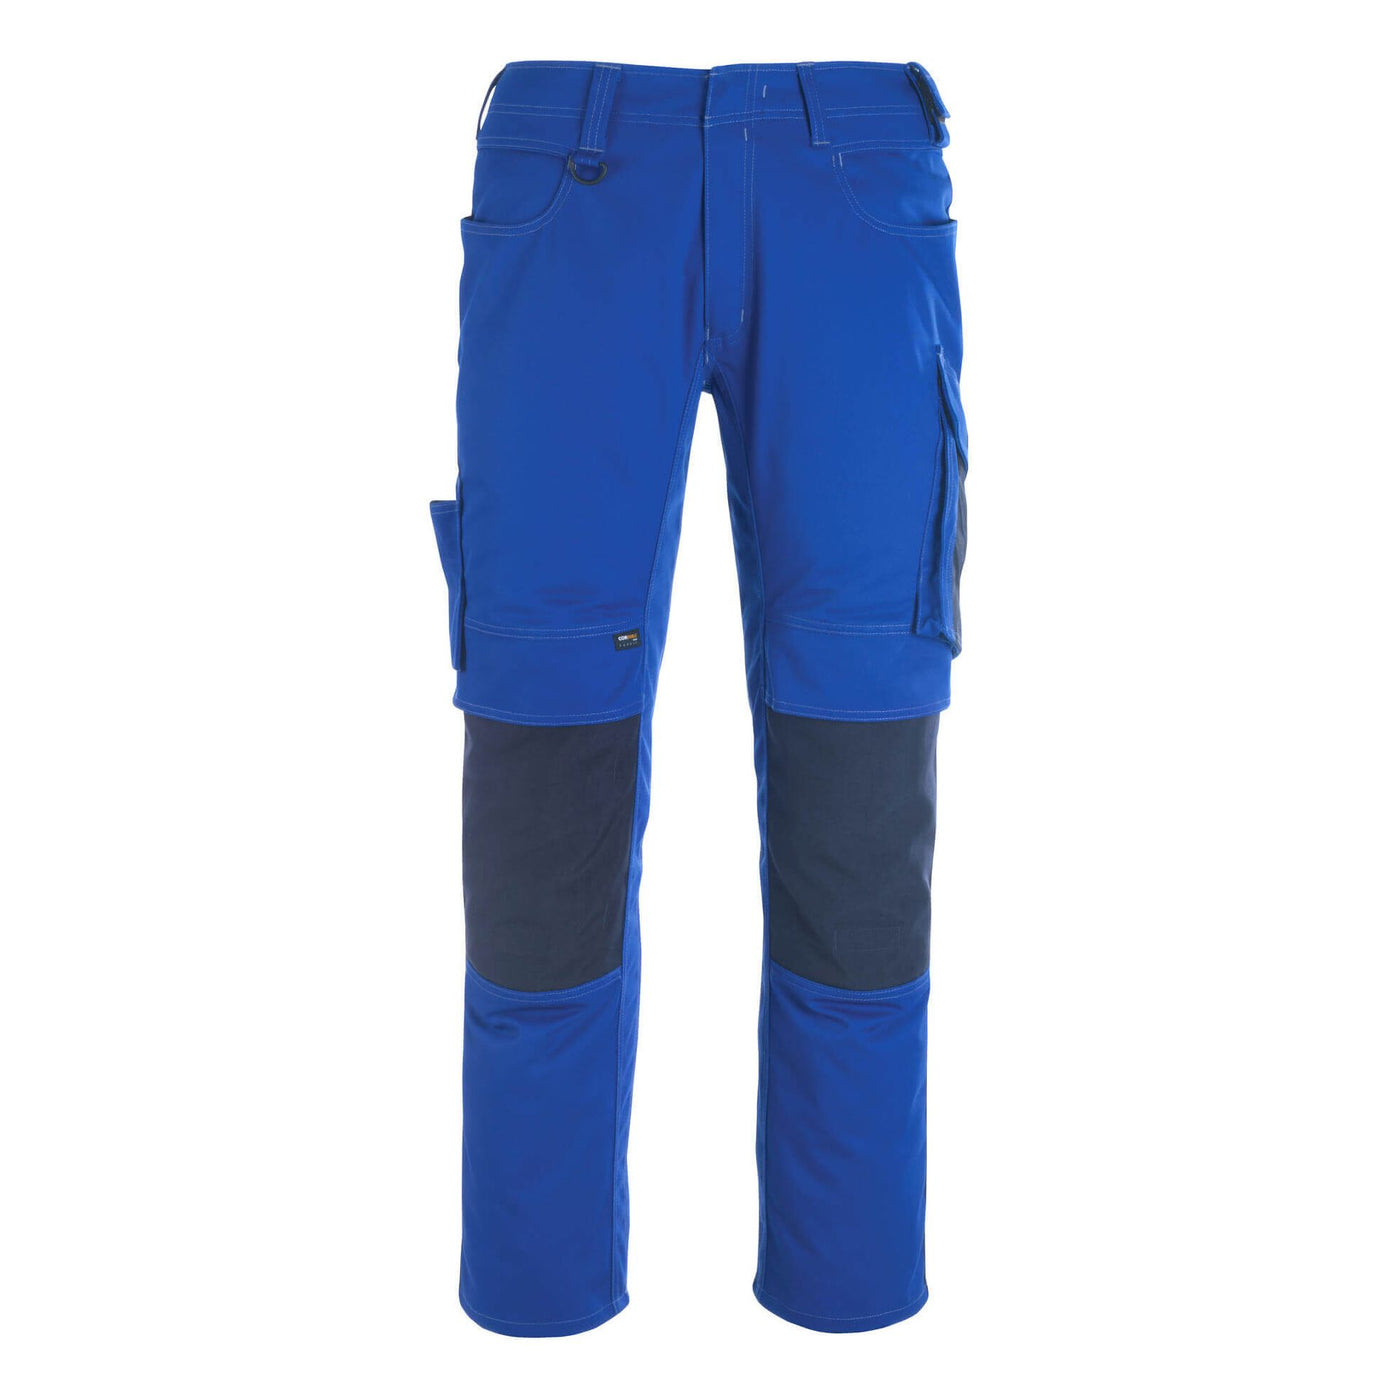 Mascot Erlangen Work Trousers Knee-Pad-Pockets 12179-203 Front #colour_royal-blue-dark-navy-blue